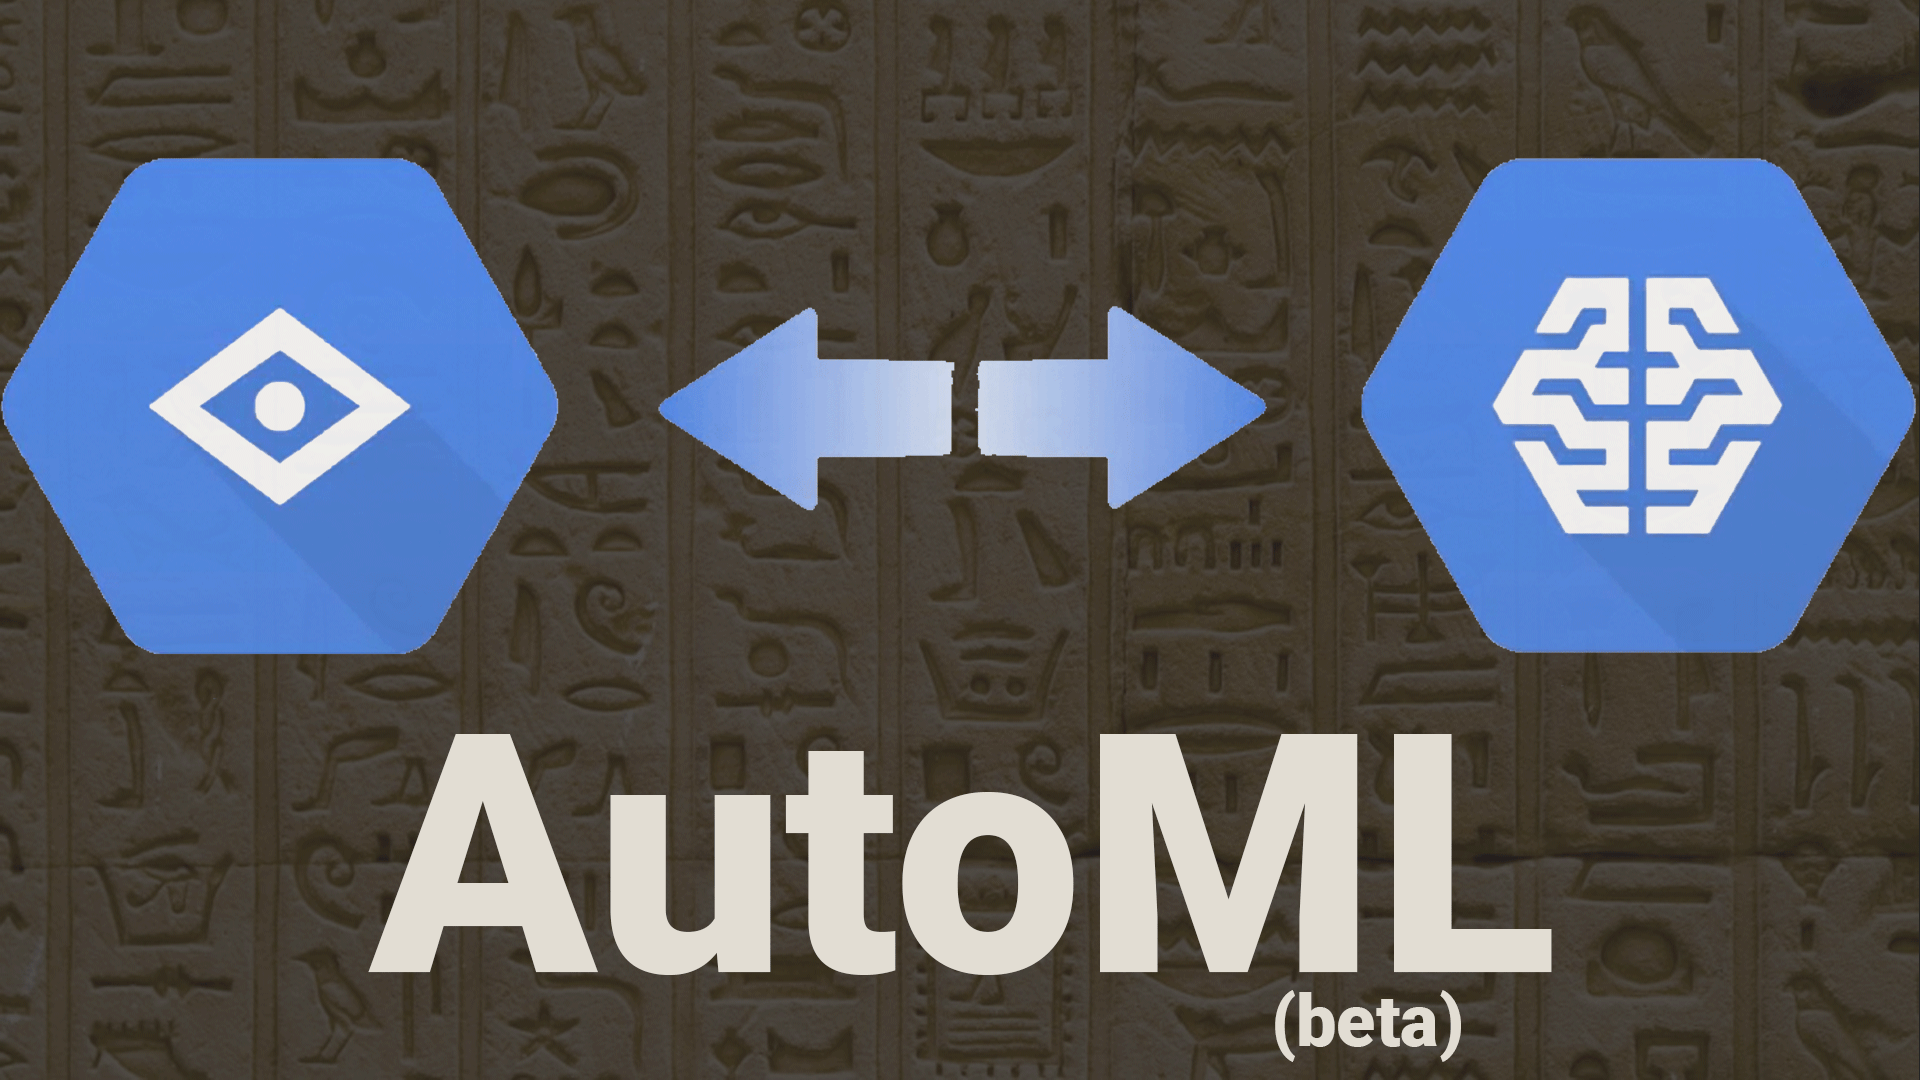 Egyptian Hieroglyphics and Google Cloud AutoML Vision